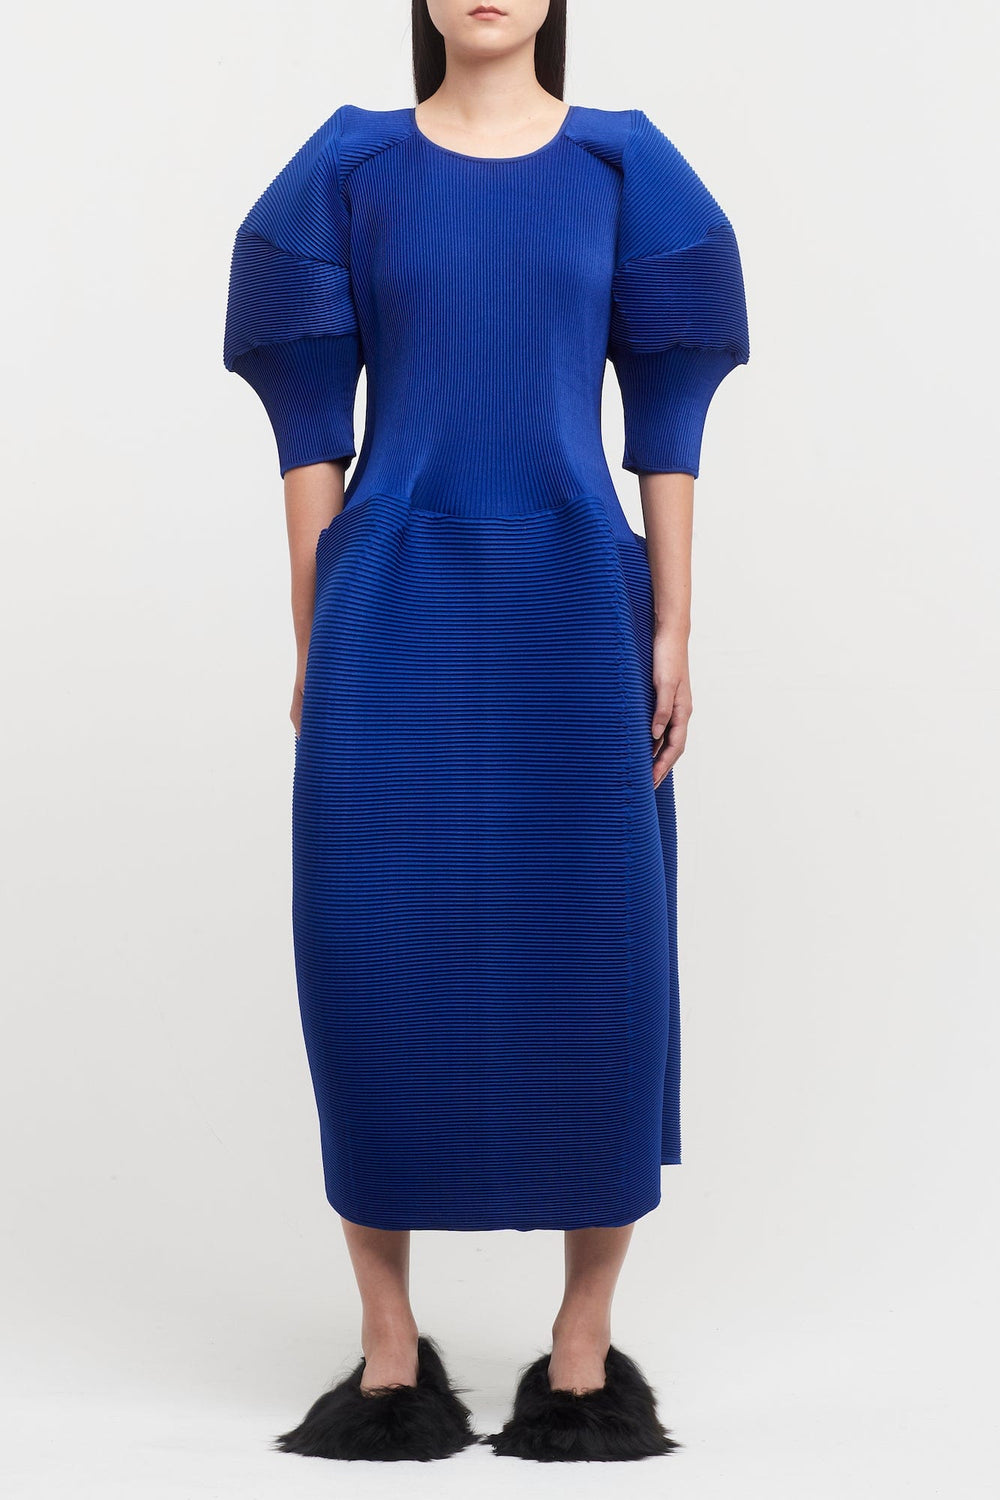 Fashion Baumeister Lifestyle and – Antidote Ripple Blue Dress Big Melitta Sleeve